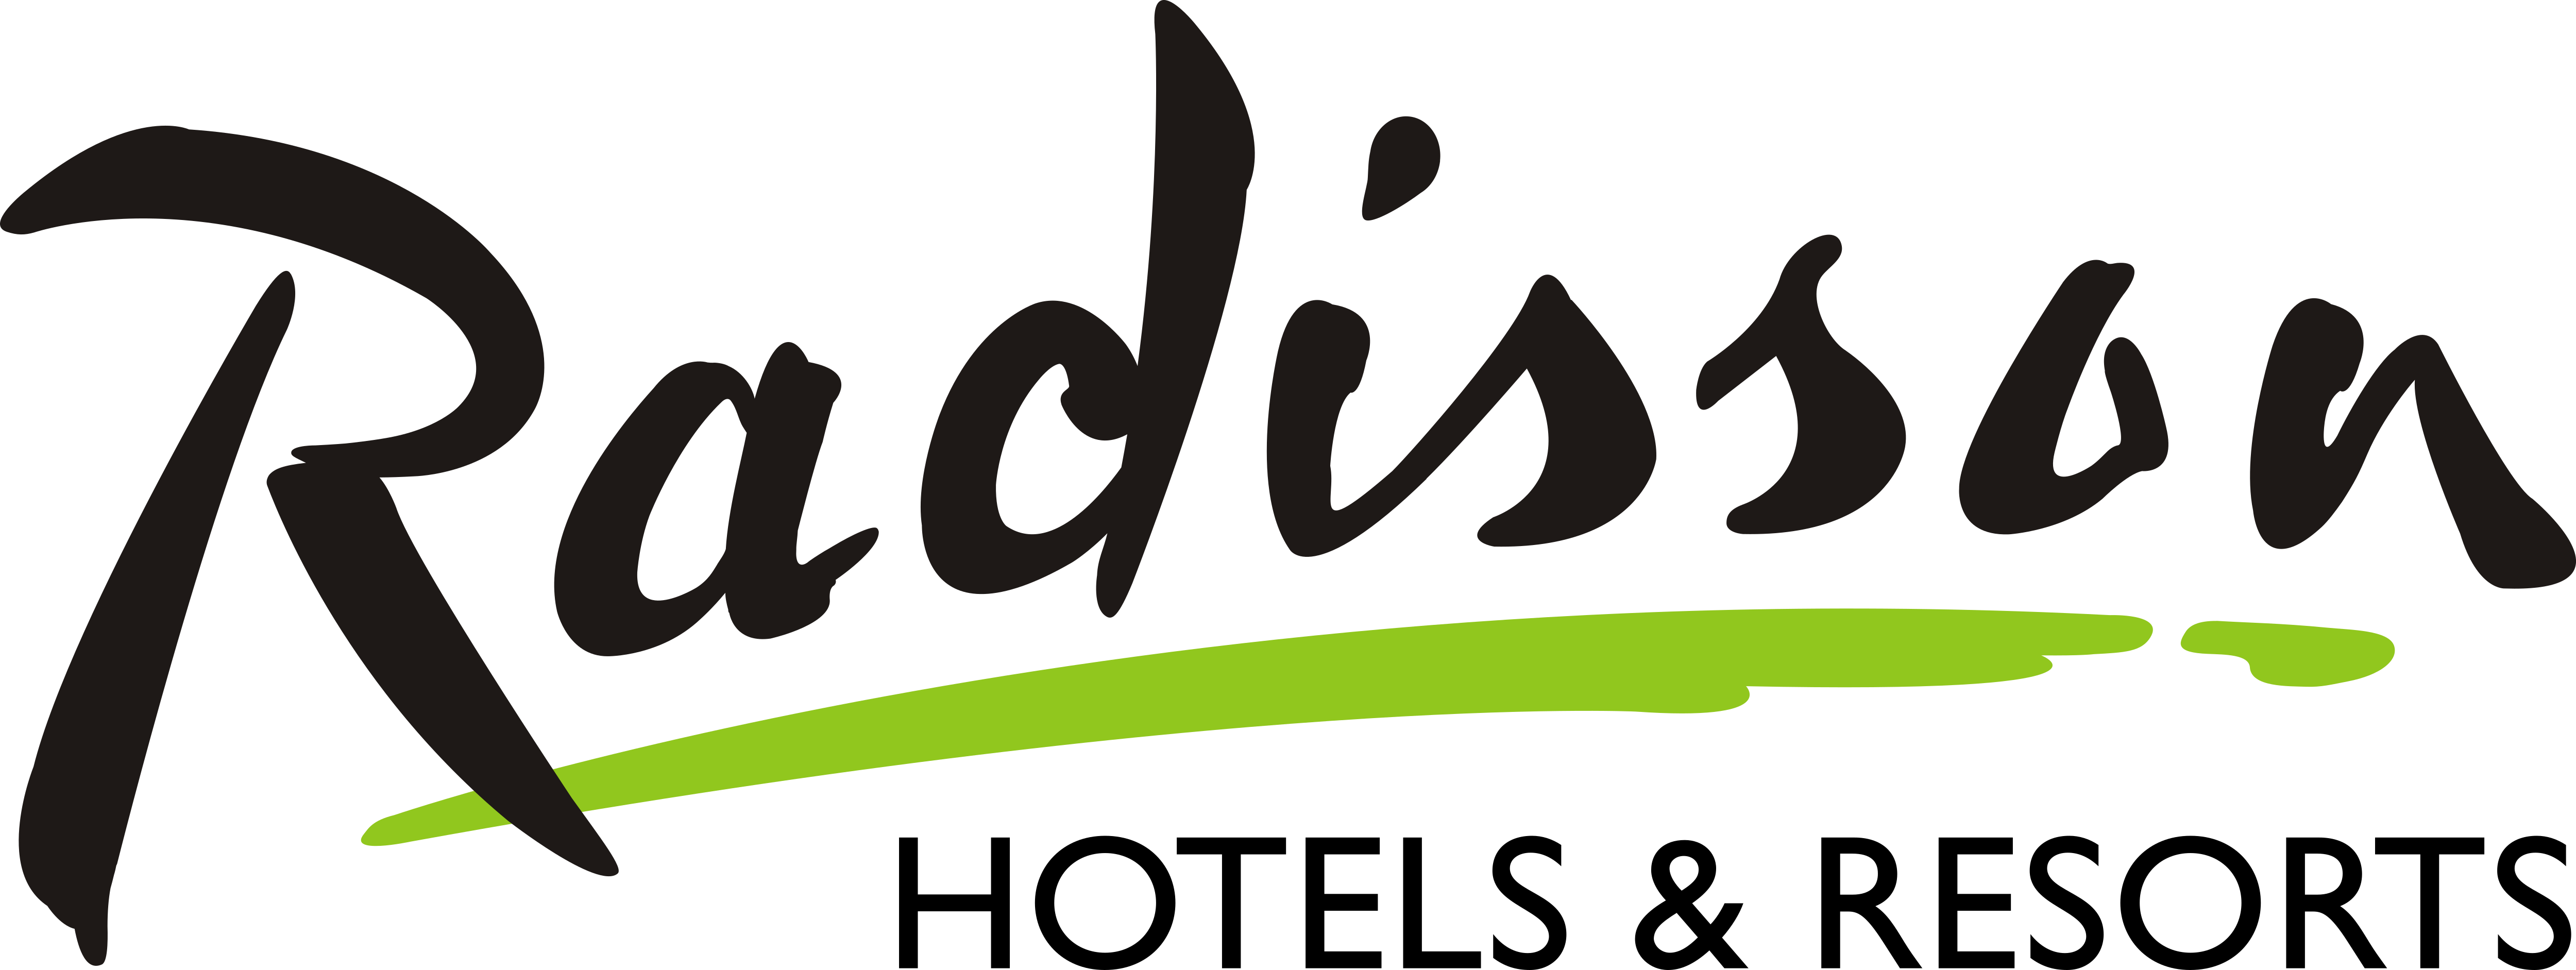 radisson hotels and restorts logo png #41797